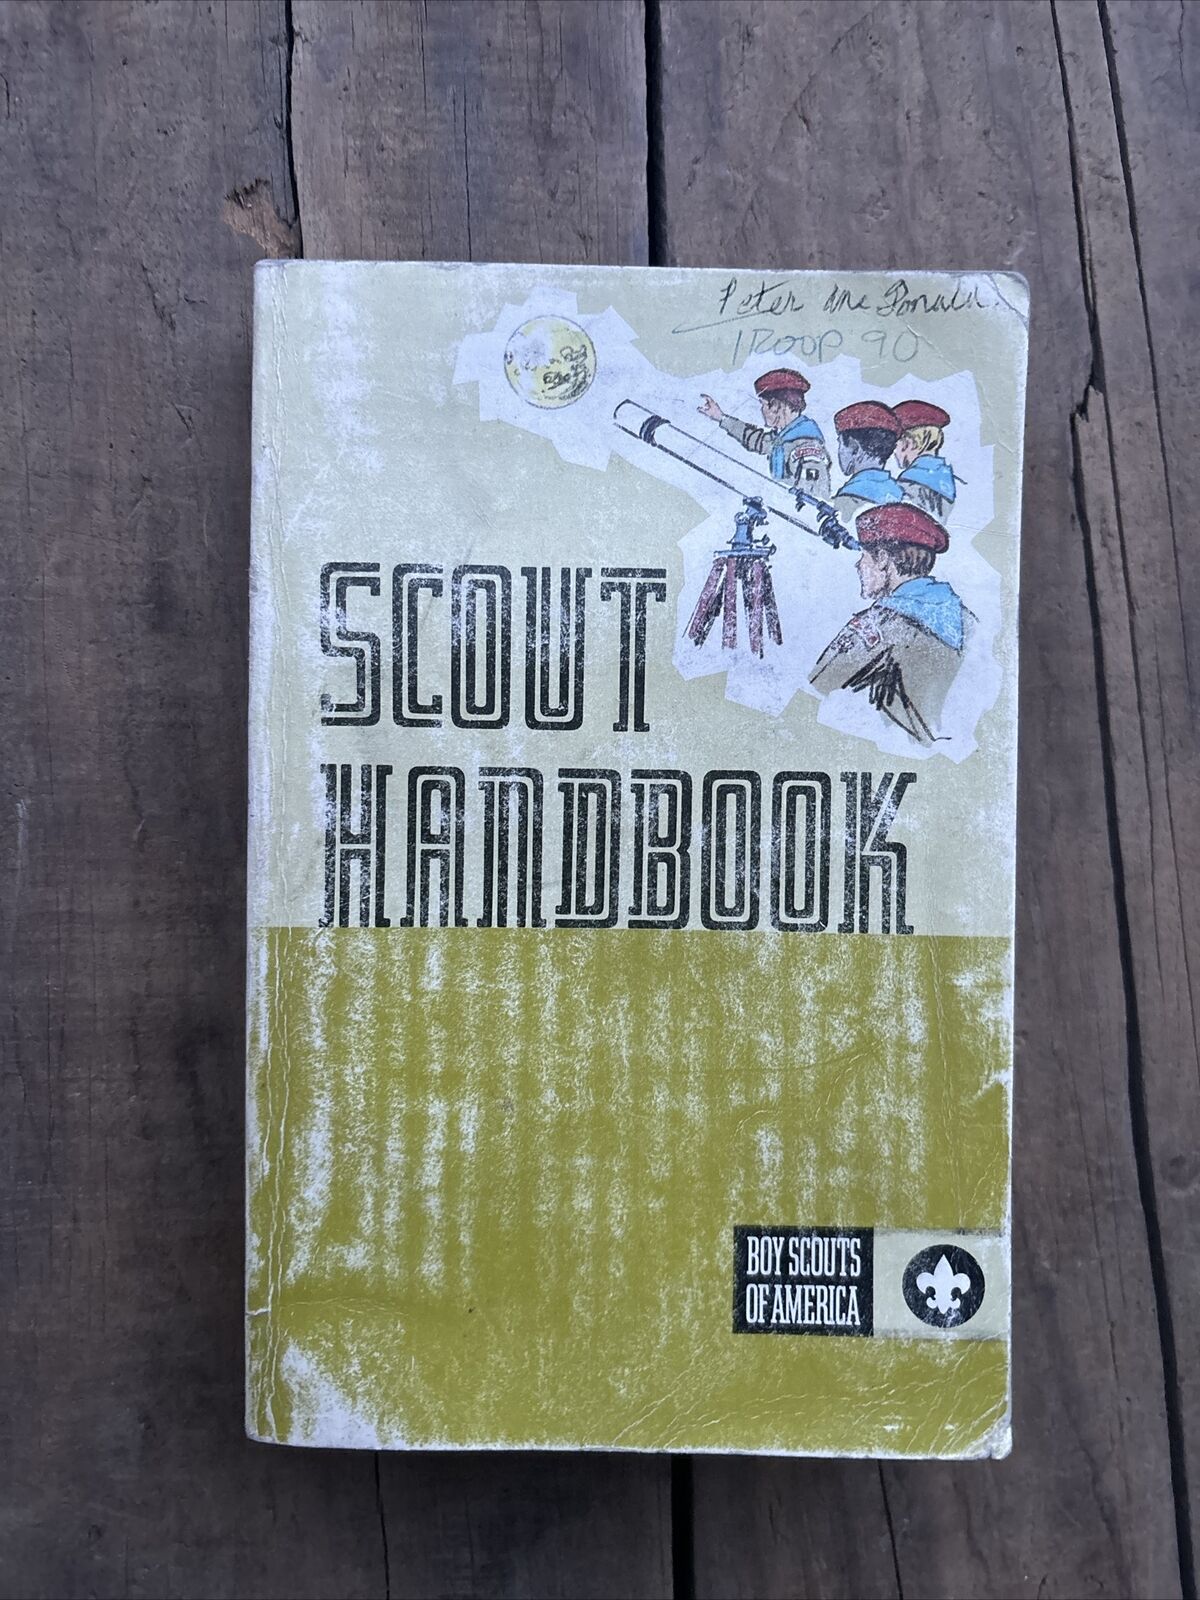 Boy Scout Handbook 1972 Vintage Boy Scouts of America